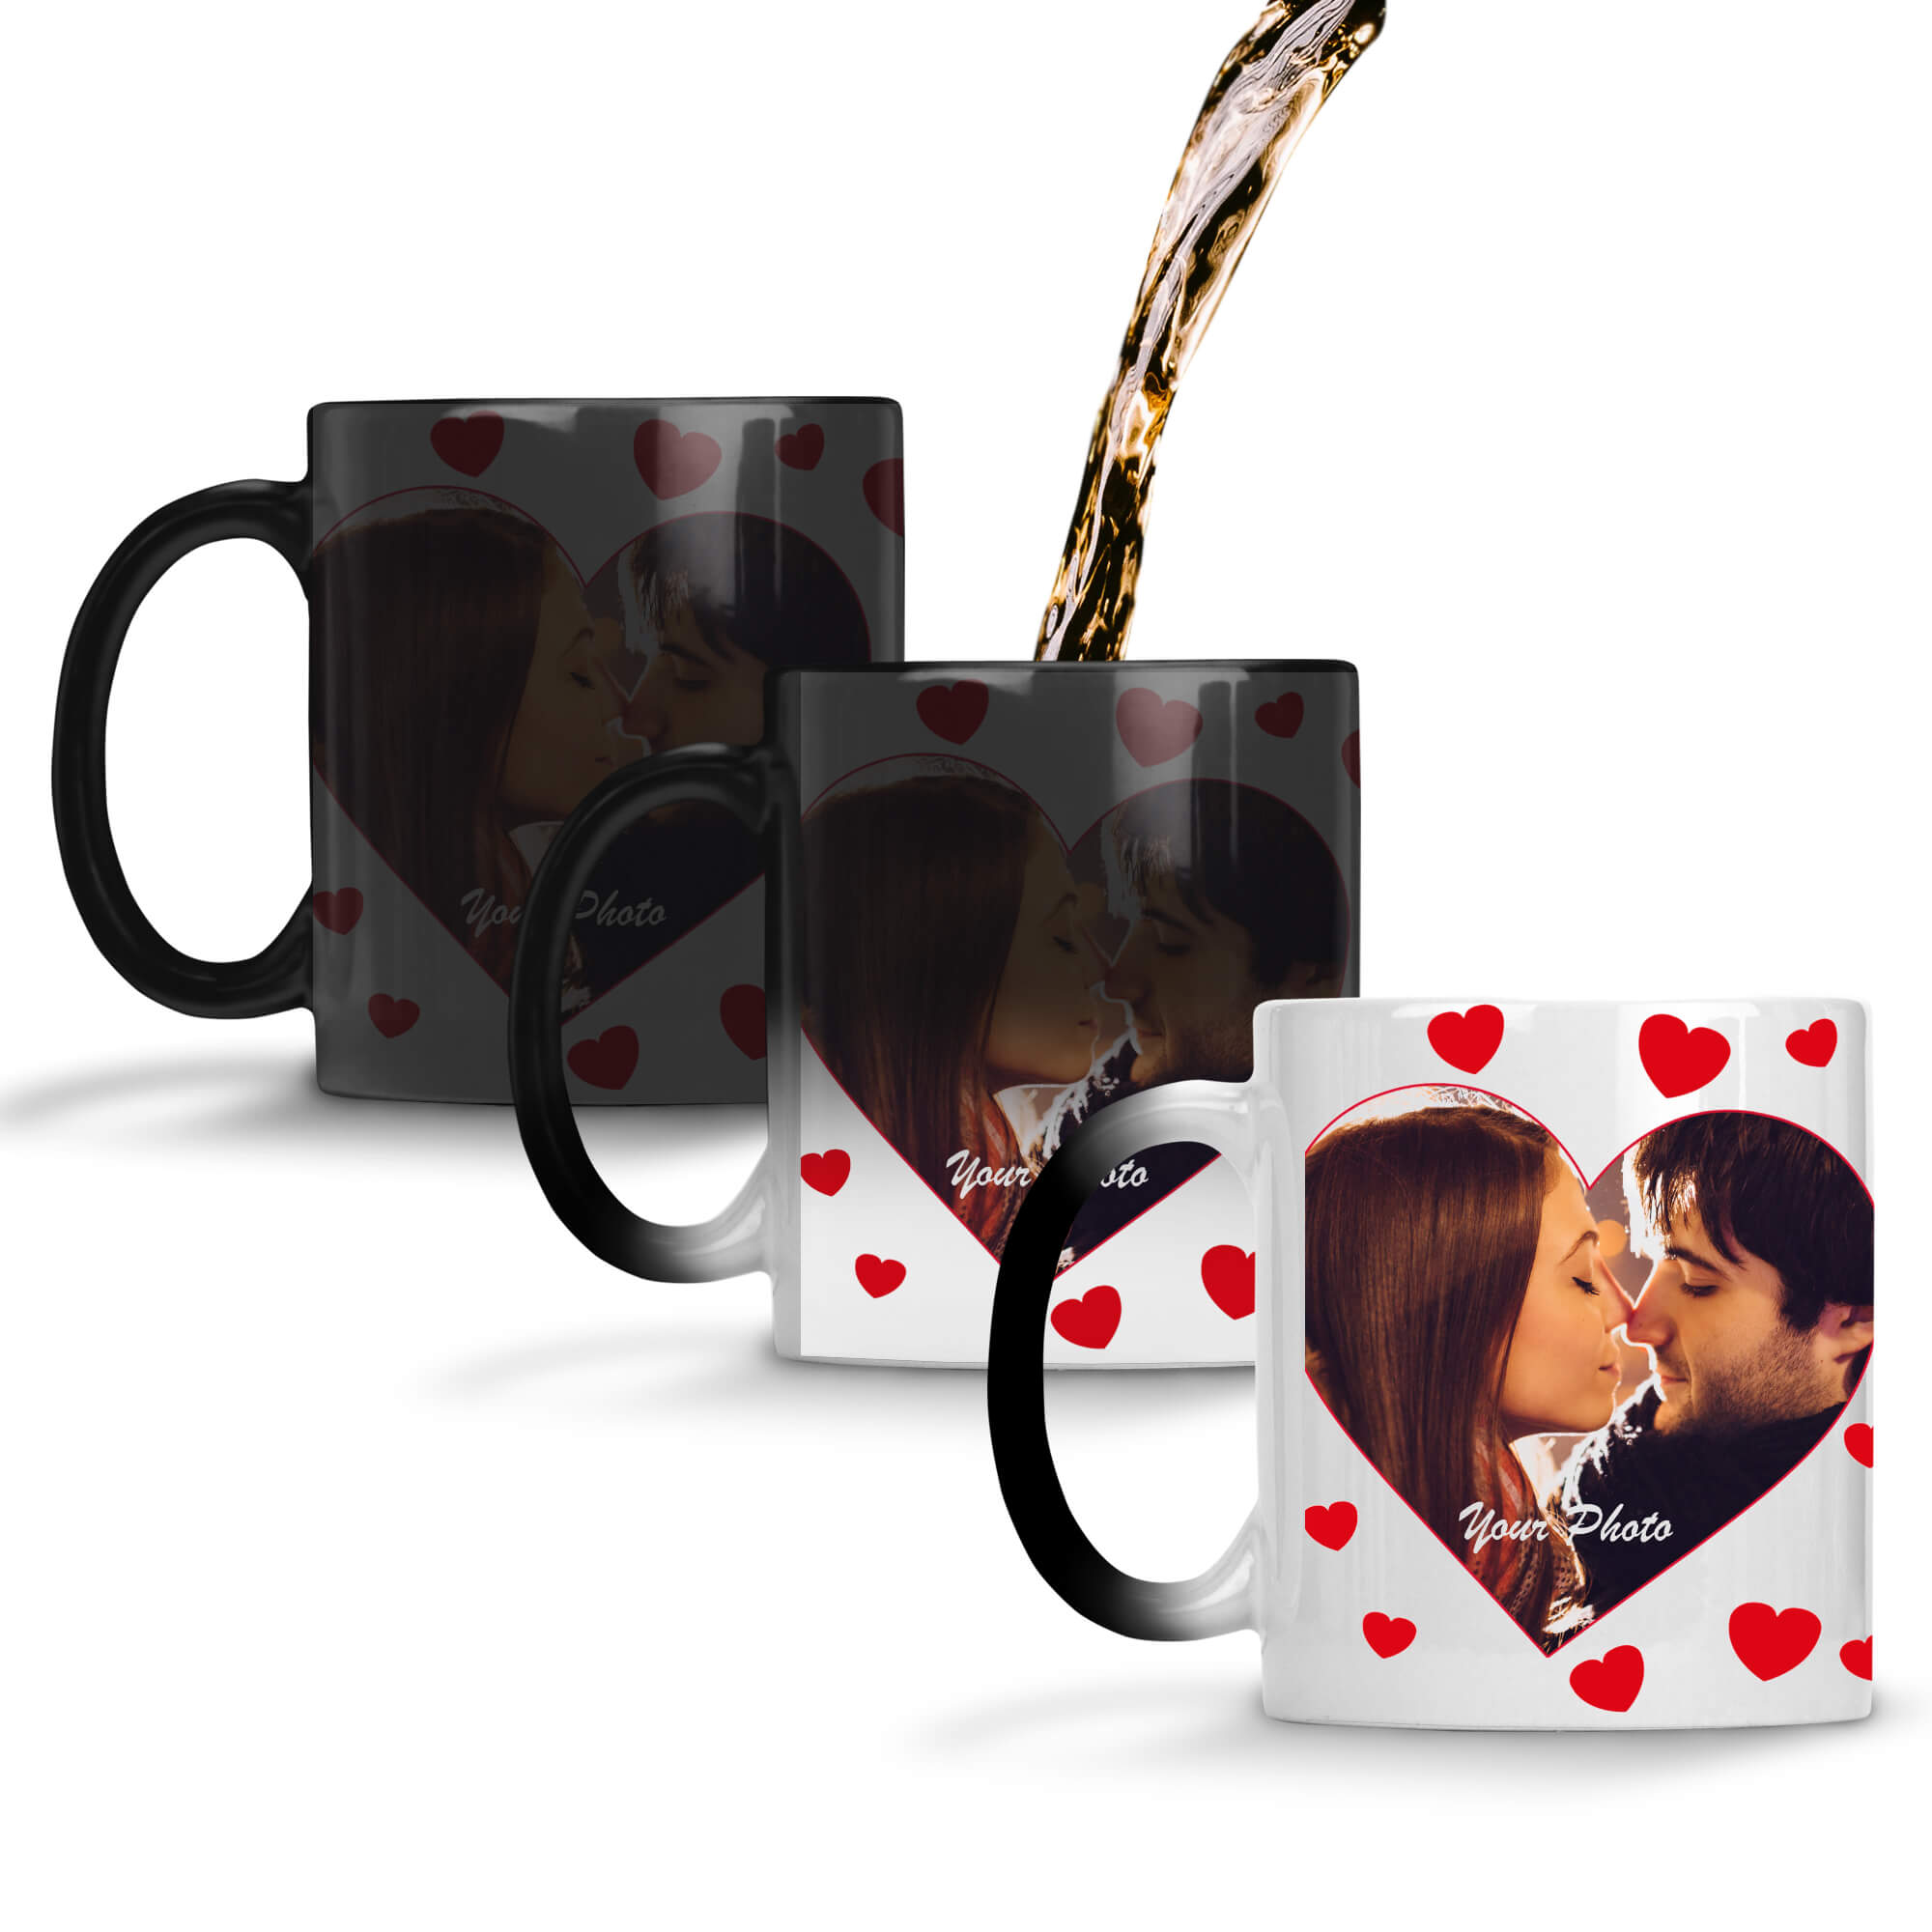 Loving Hearts Coffee Mug Magic